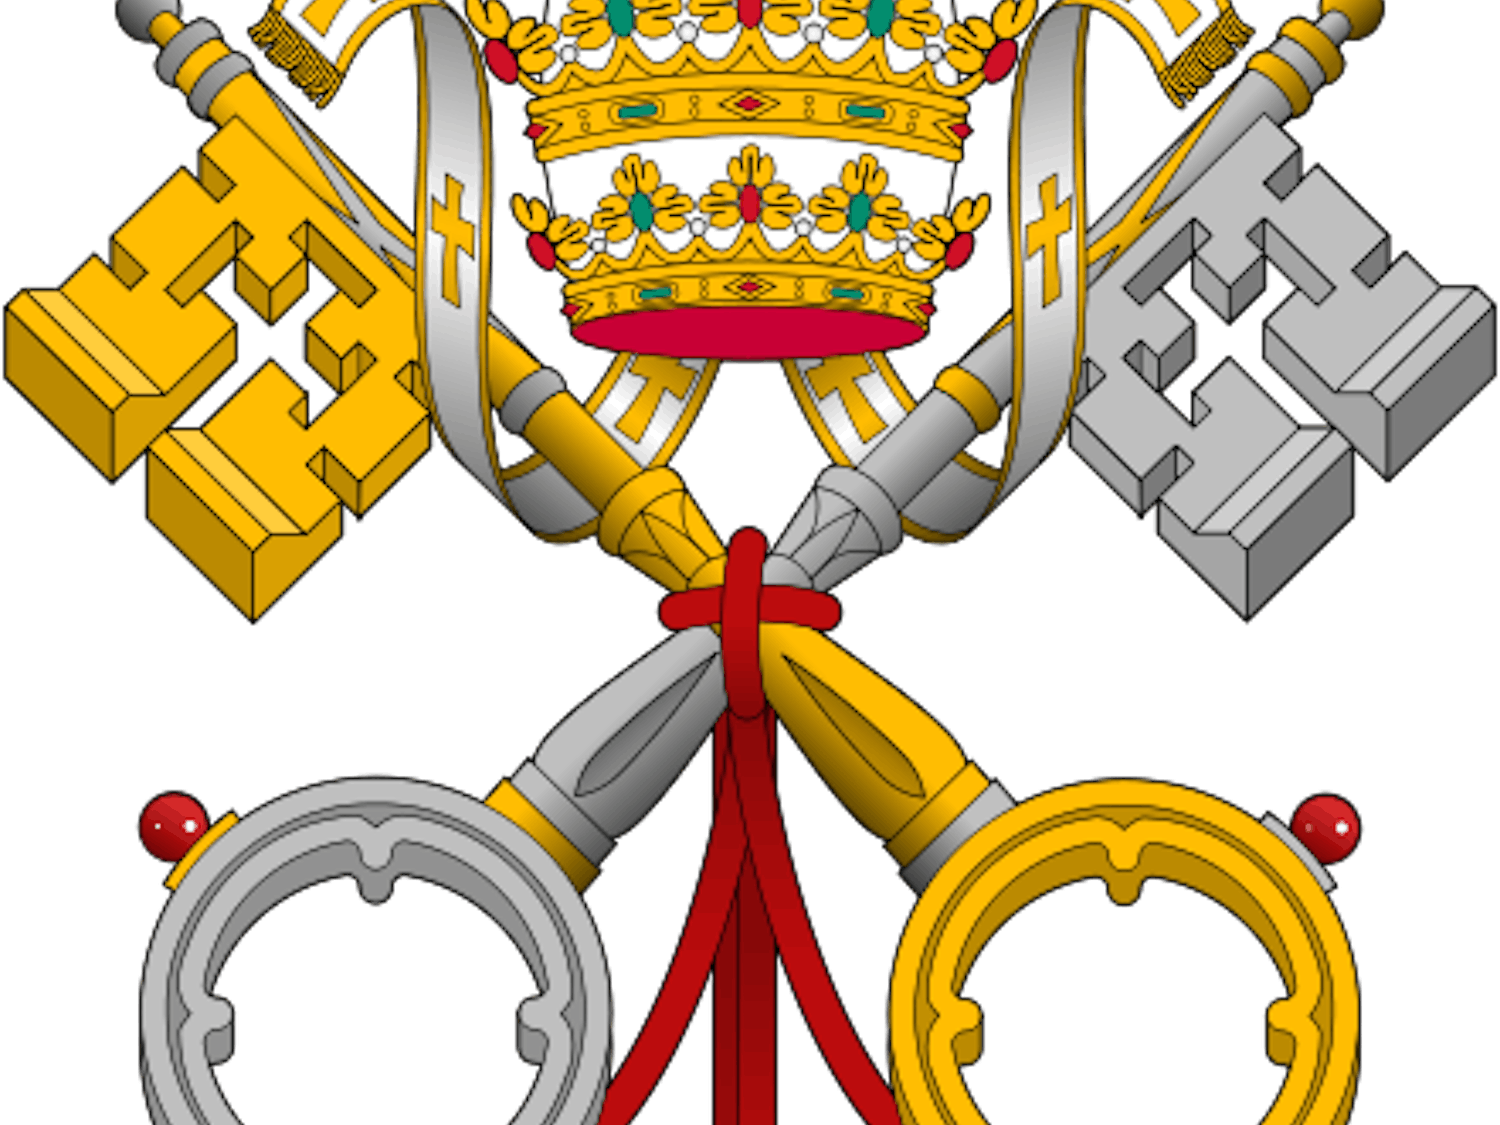 Emblem_of_the_Papacy_SE.svg_.png